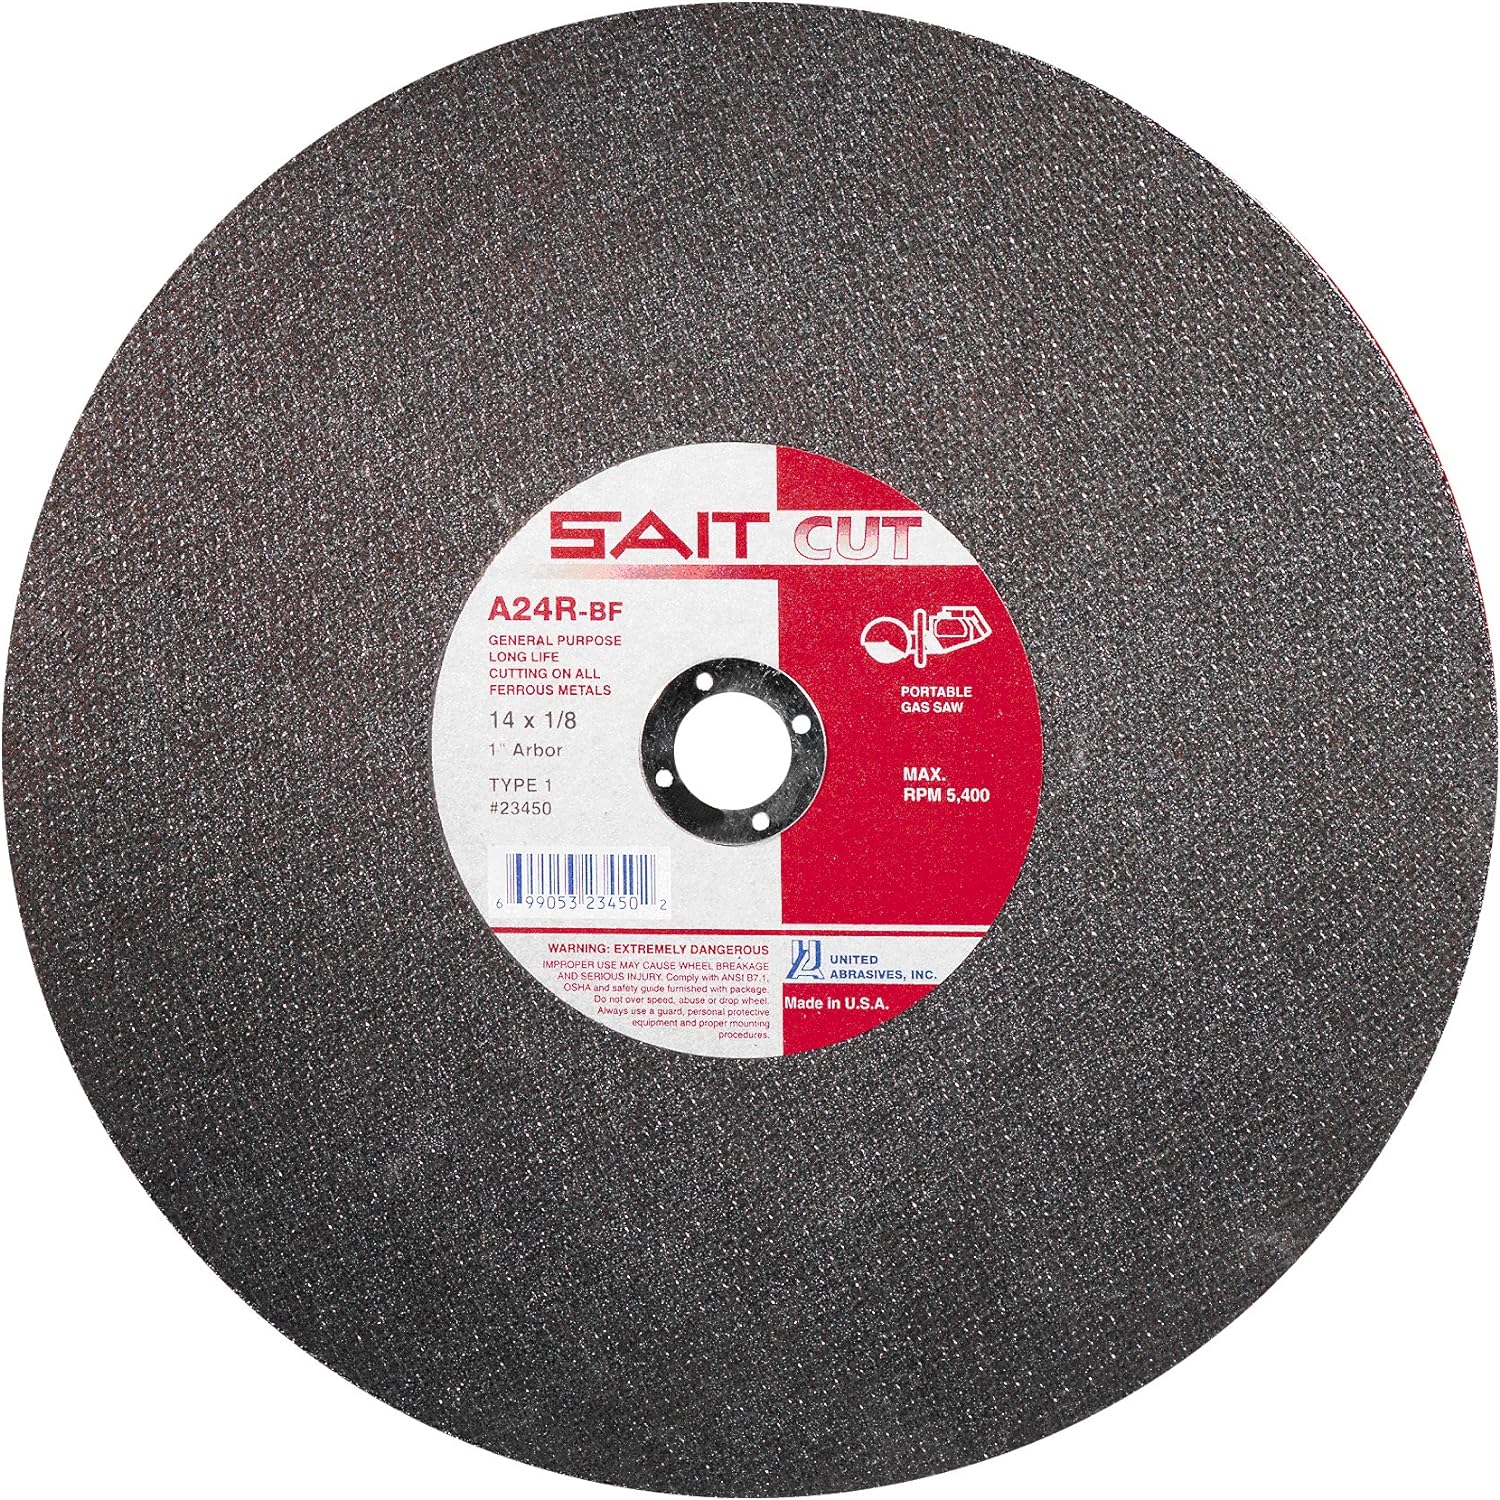 SAIT, 12" 24 Grit Silicon Carbide Cutoff Wheel1/8" Thick, 1.